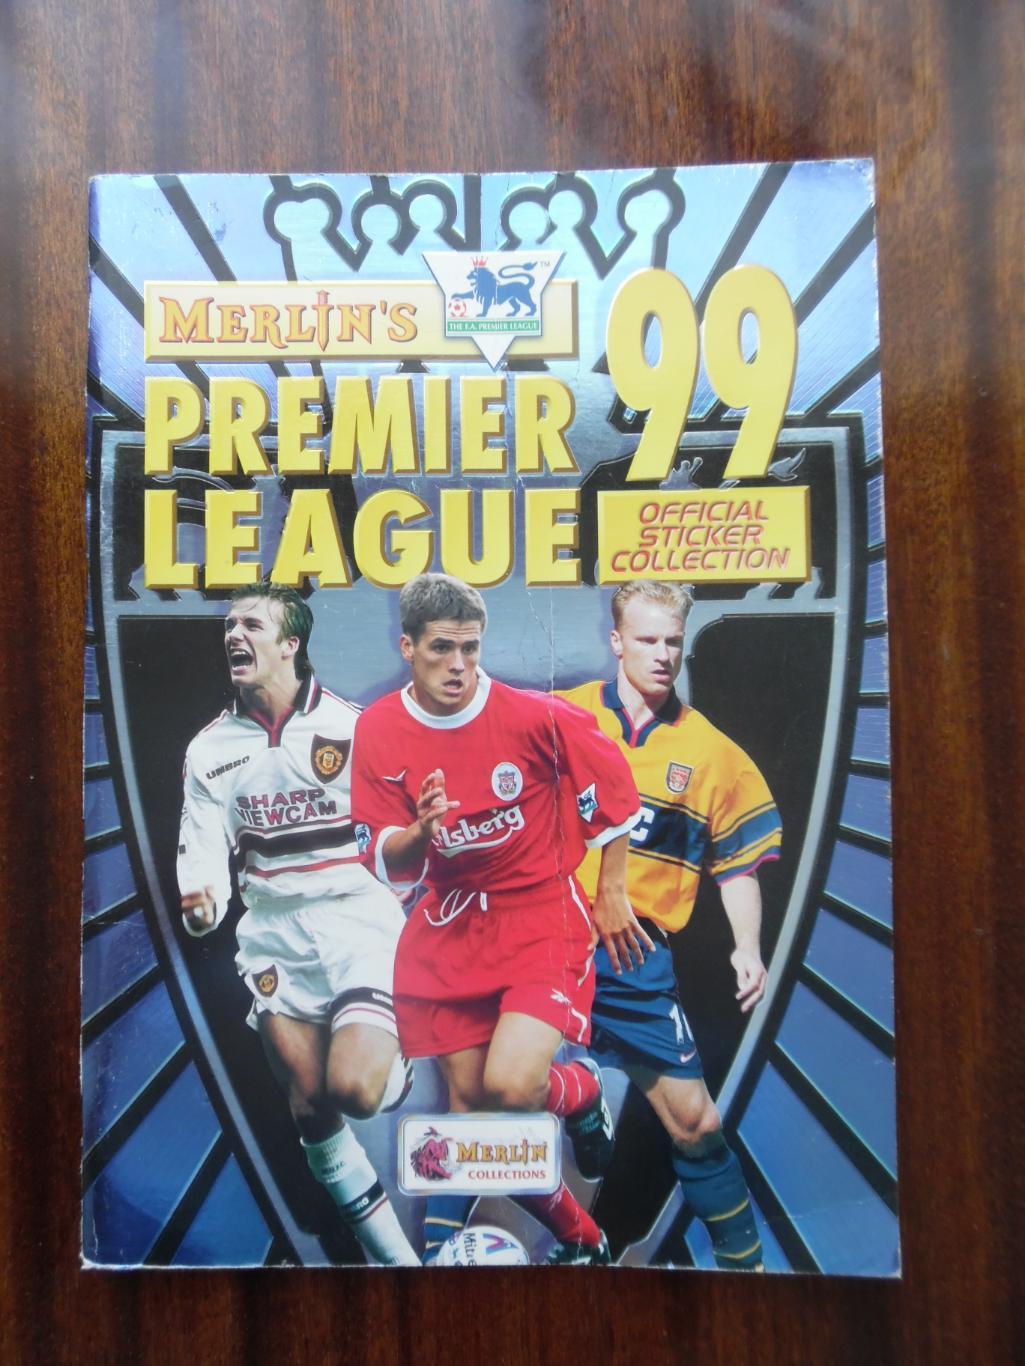 Альбом Premier League 99, Merlin